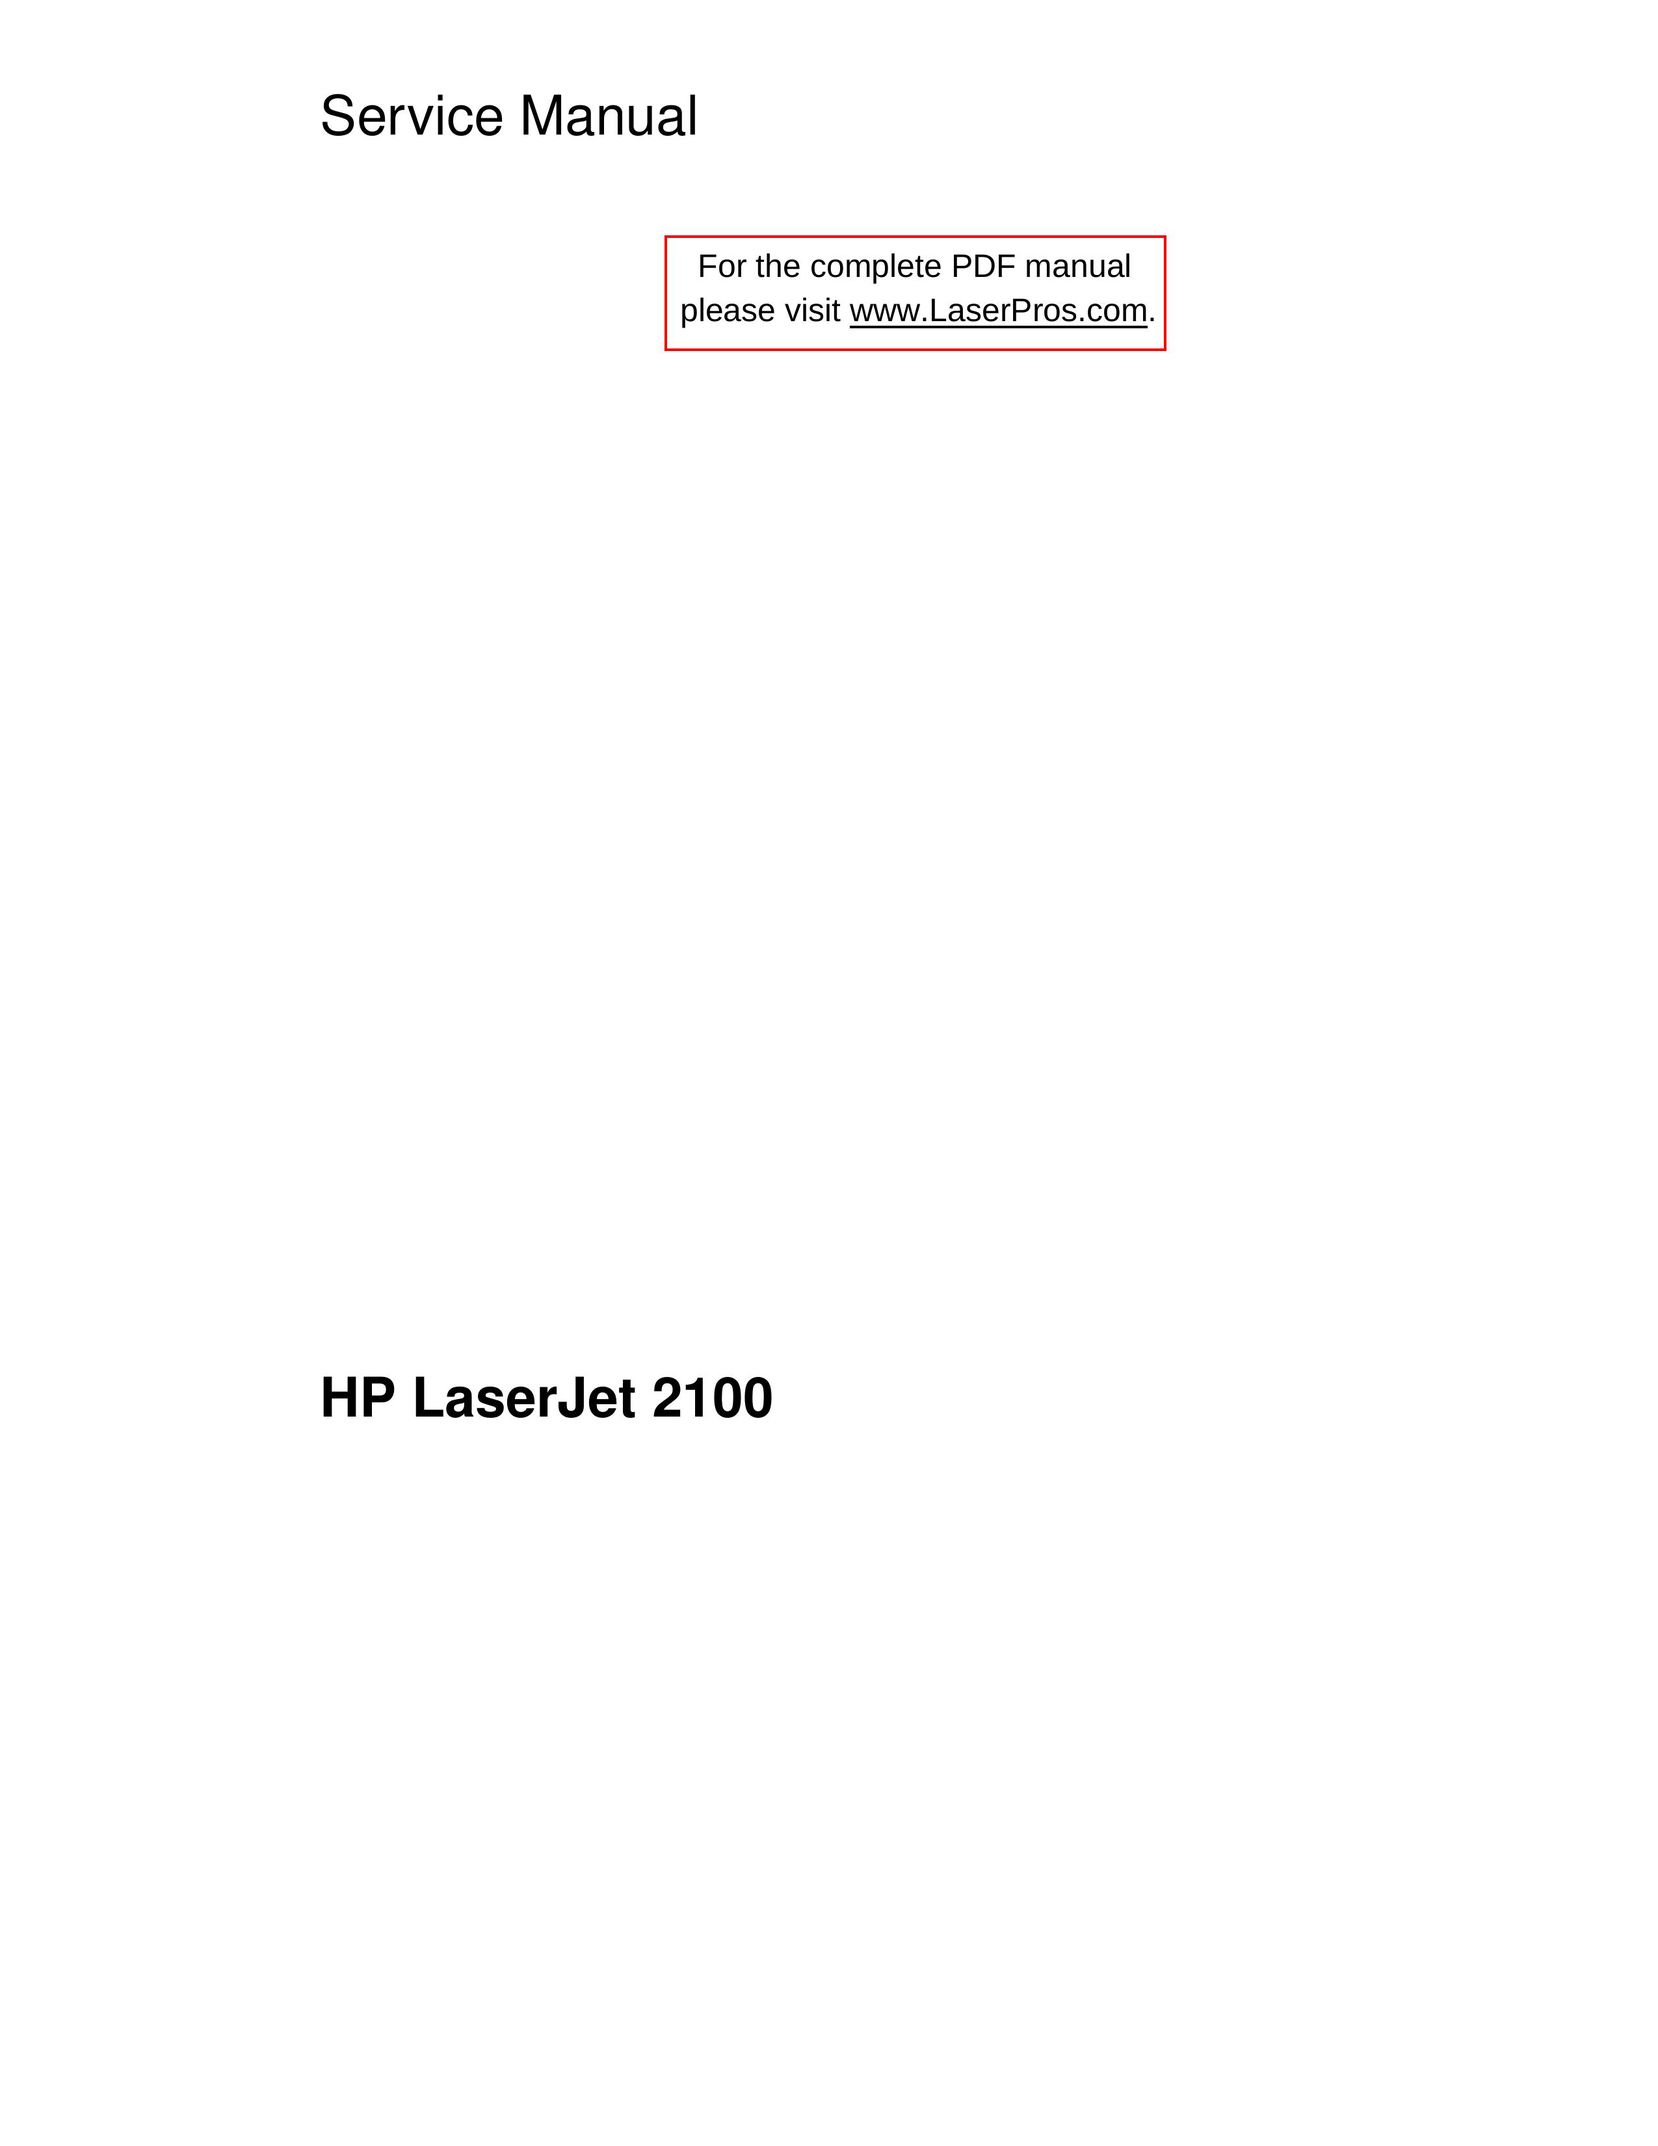 HP (Hewlett-Packard) 2100 All in One Printer User Manual